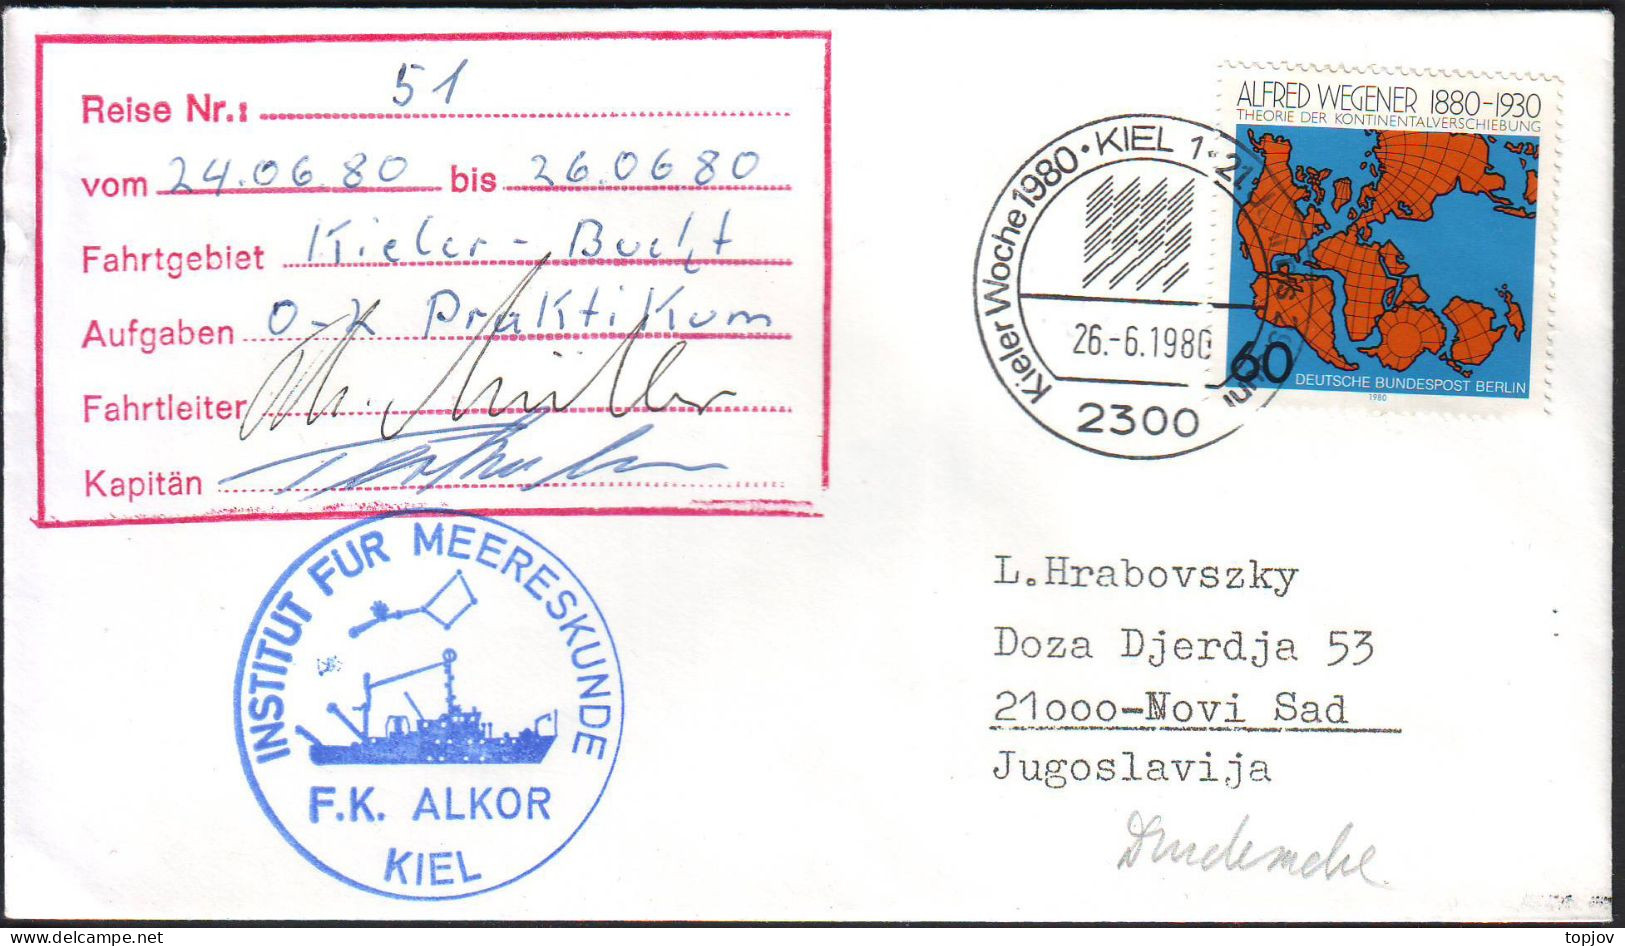 GERMANY - INSTITUT FUR MEERESKUNDE - F.K. ALKOR KIEL - 1980 - Bases Antarctiques